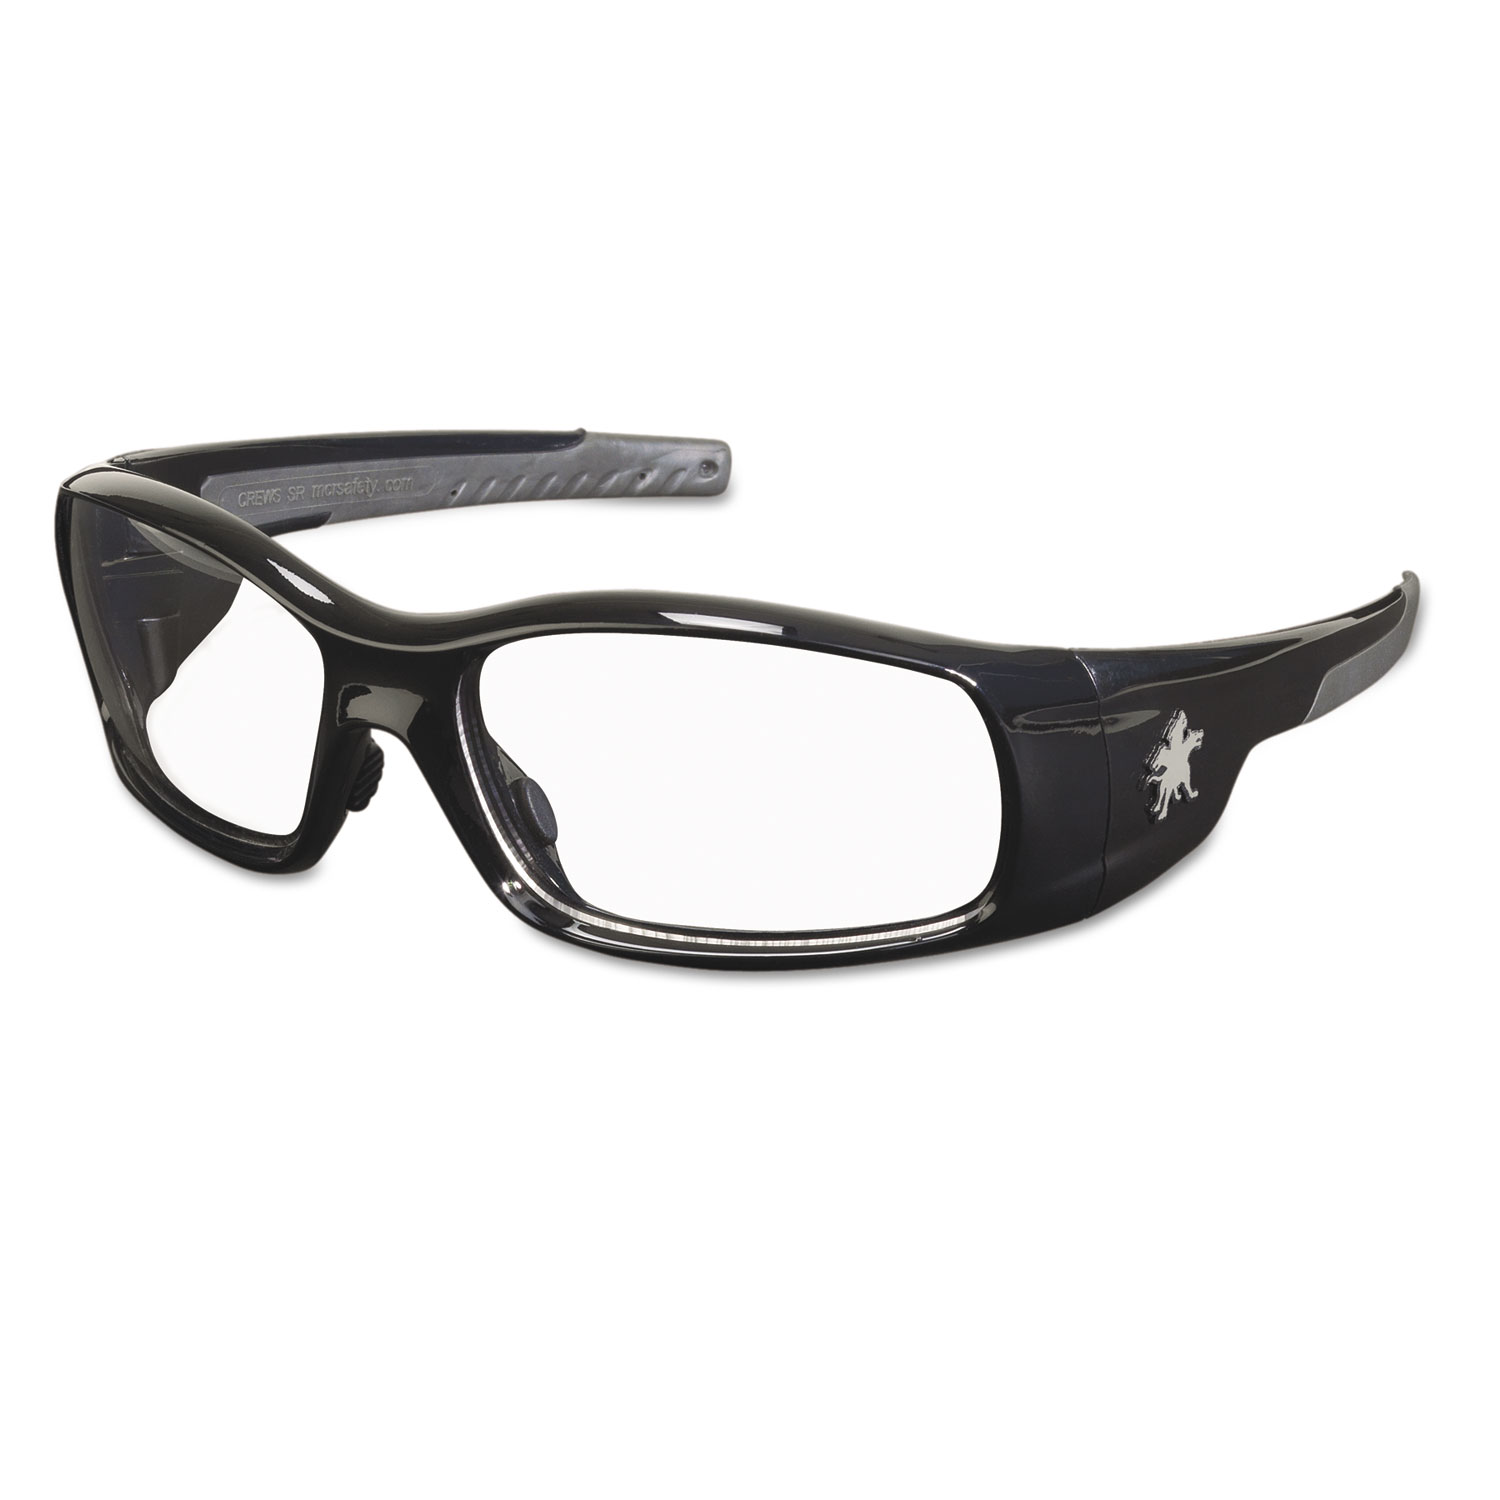  MCR Safety SR110 Swagger Safety Glasses, Black Frame, Clear Lens (CRWSR110) 